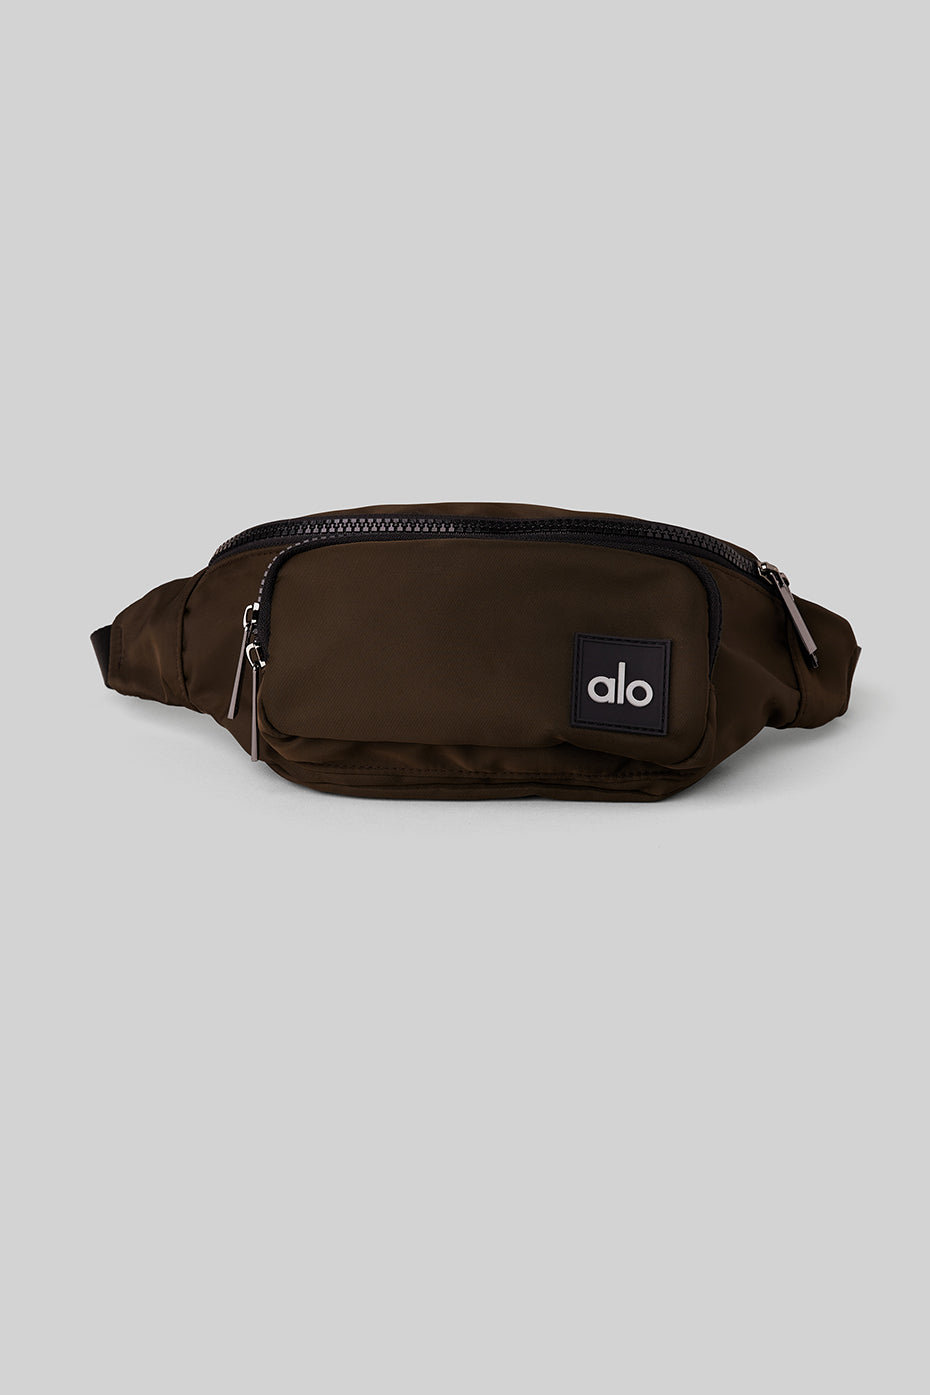 Alo Yoga | Cross Body Bucket Bag in Black